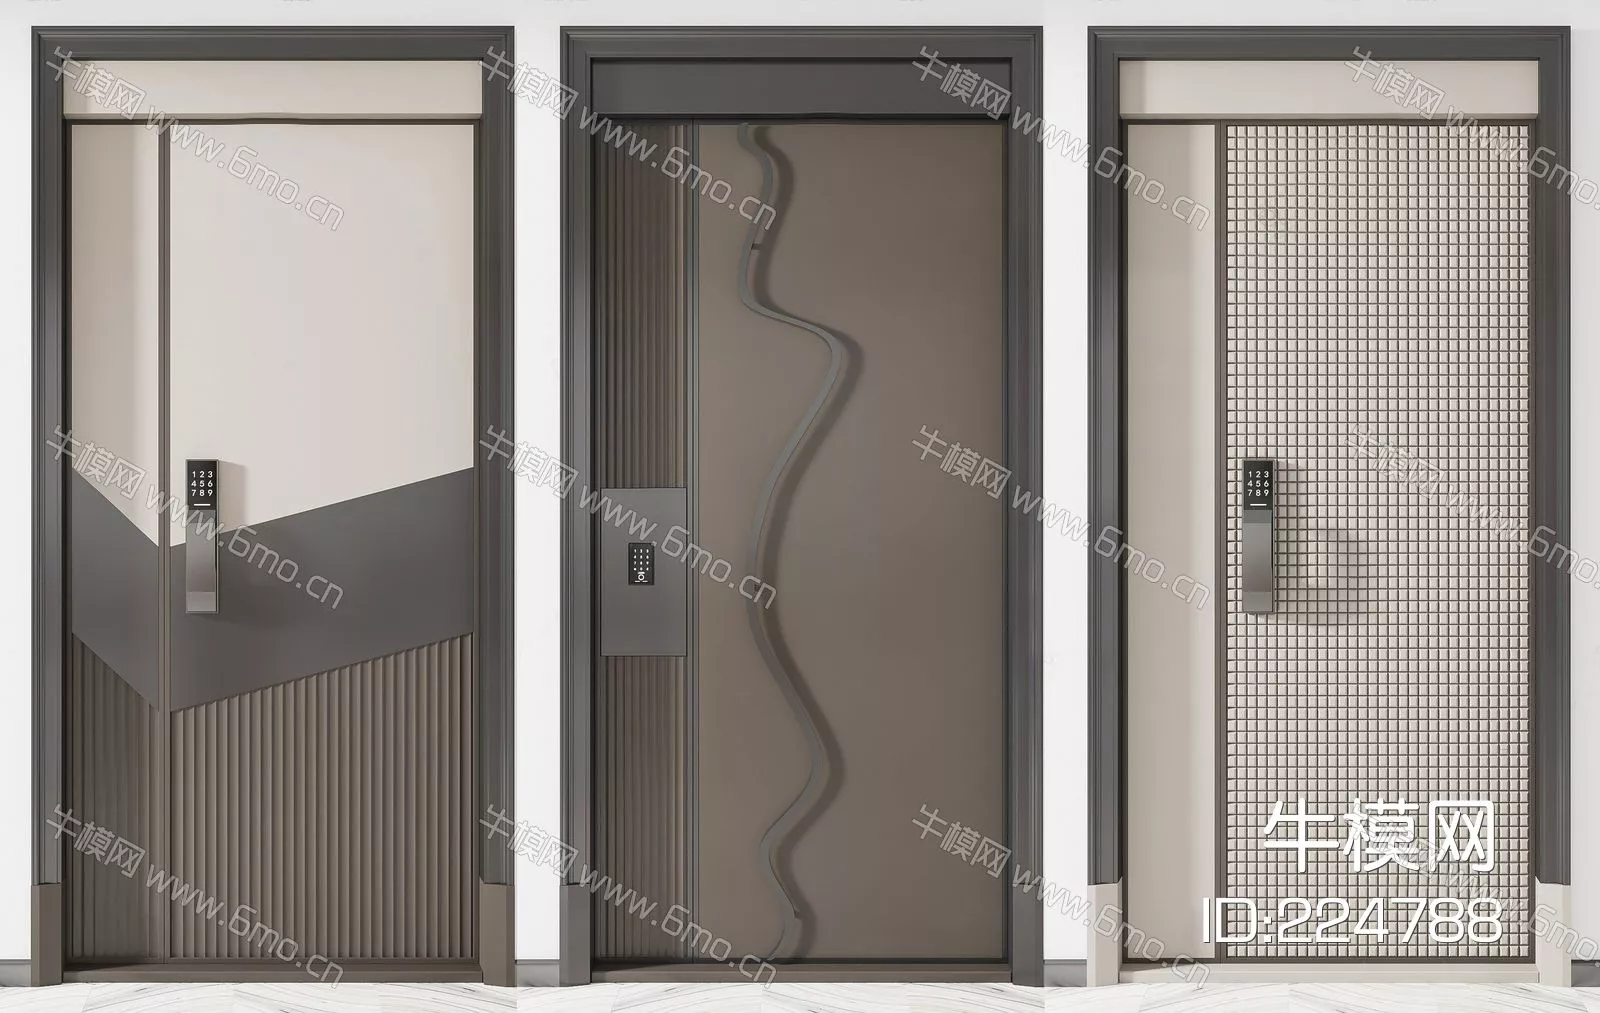 MODERN DOOR AND WINDOWS - SKETCHUP 3D MODEL - ENSCAPE - 224788